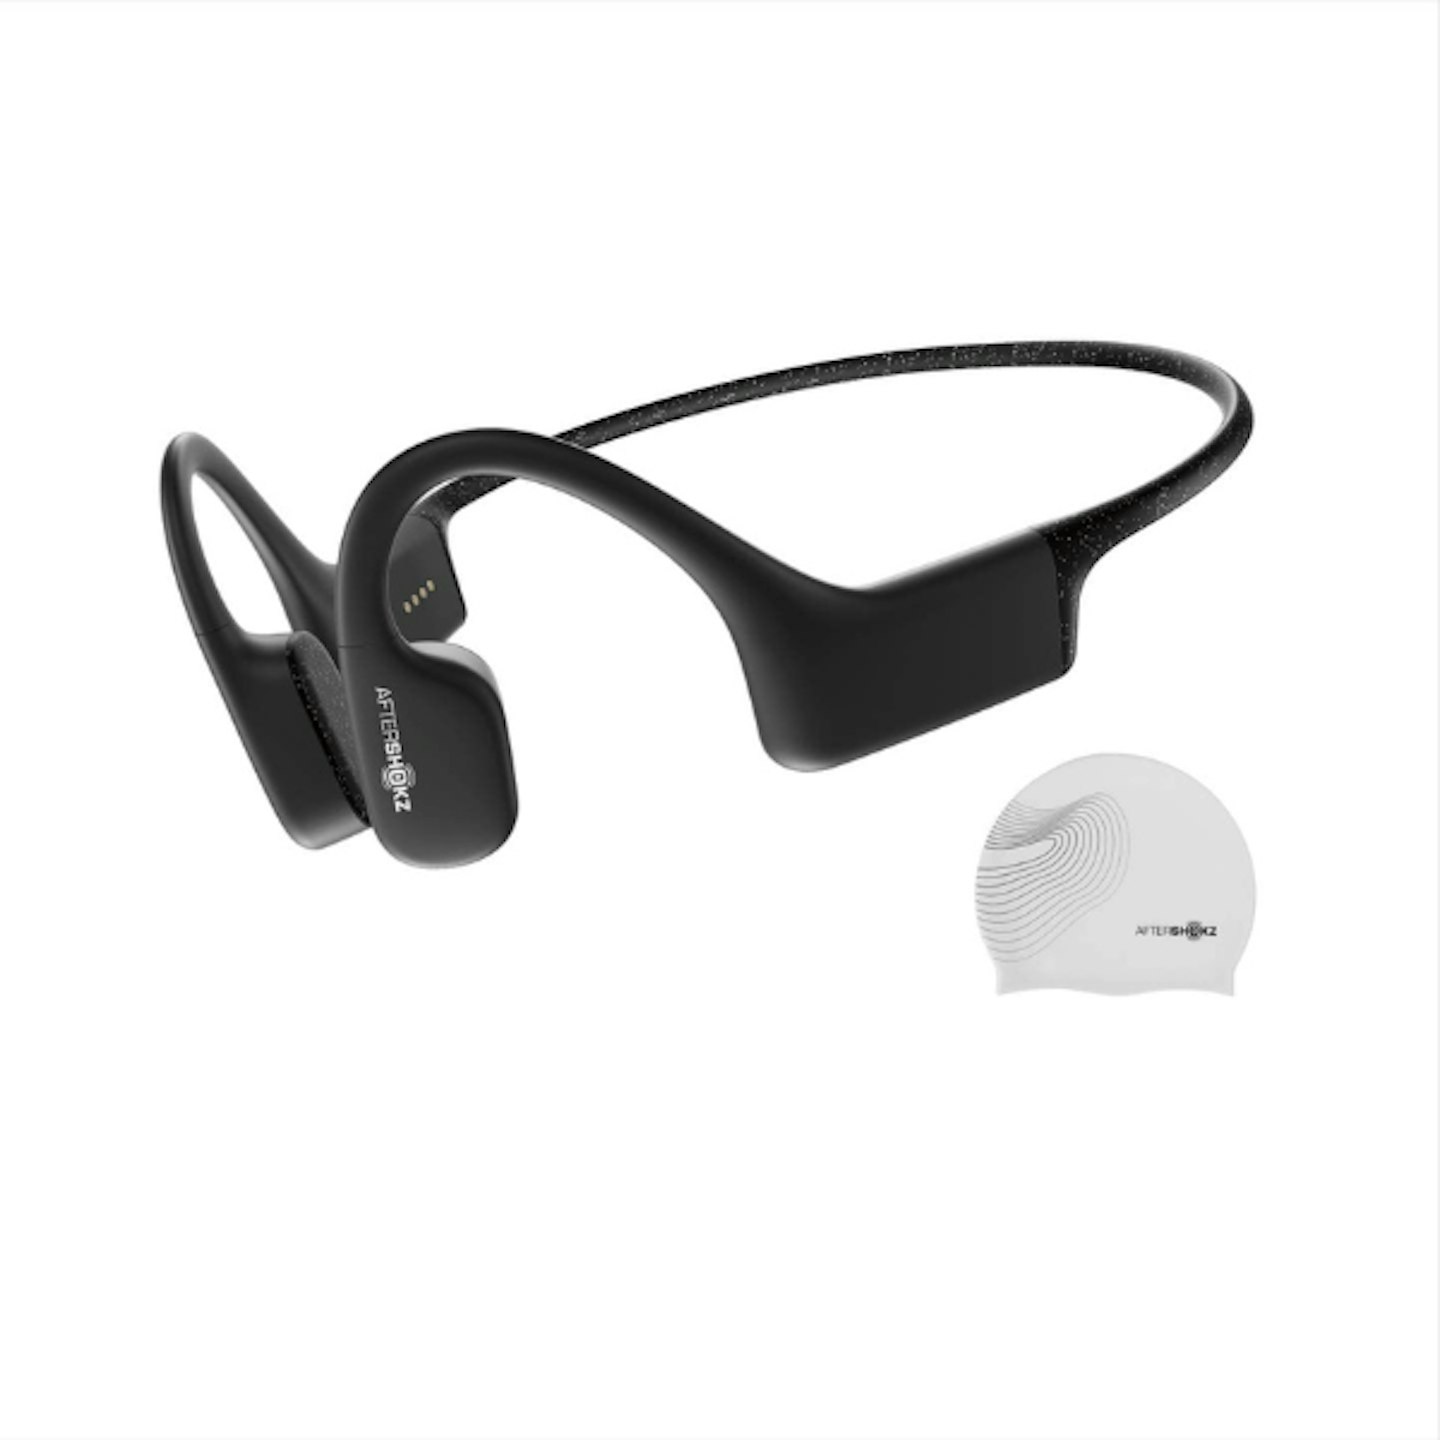 A pair of AfterShokz Xtrainerz Open-ear Swimming headphones